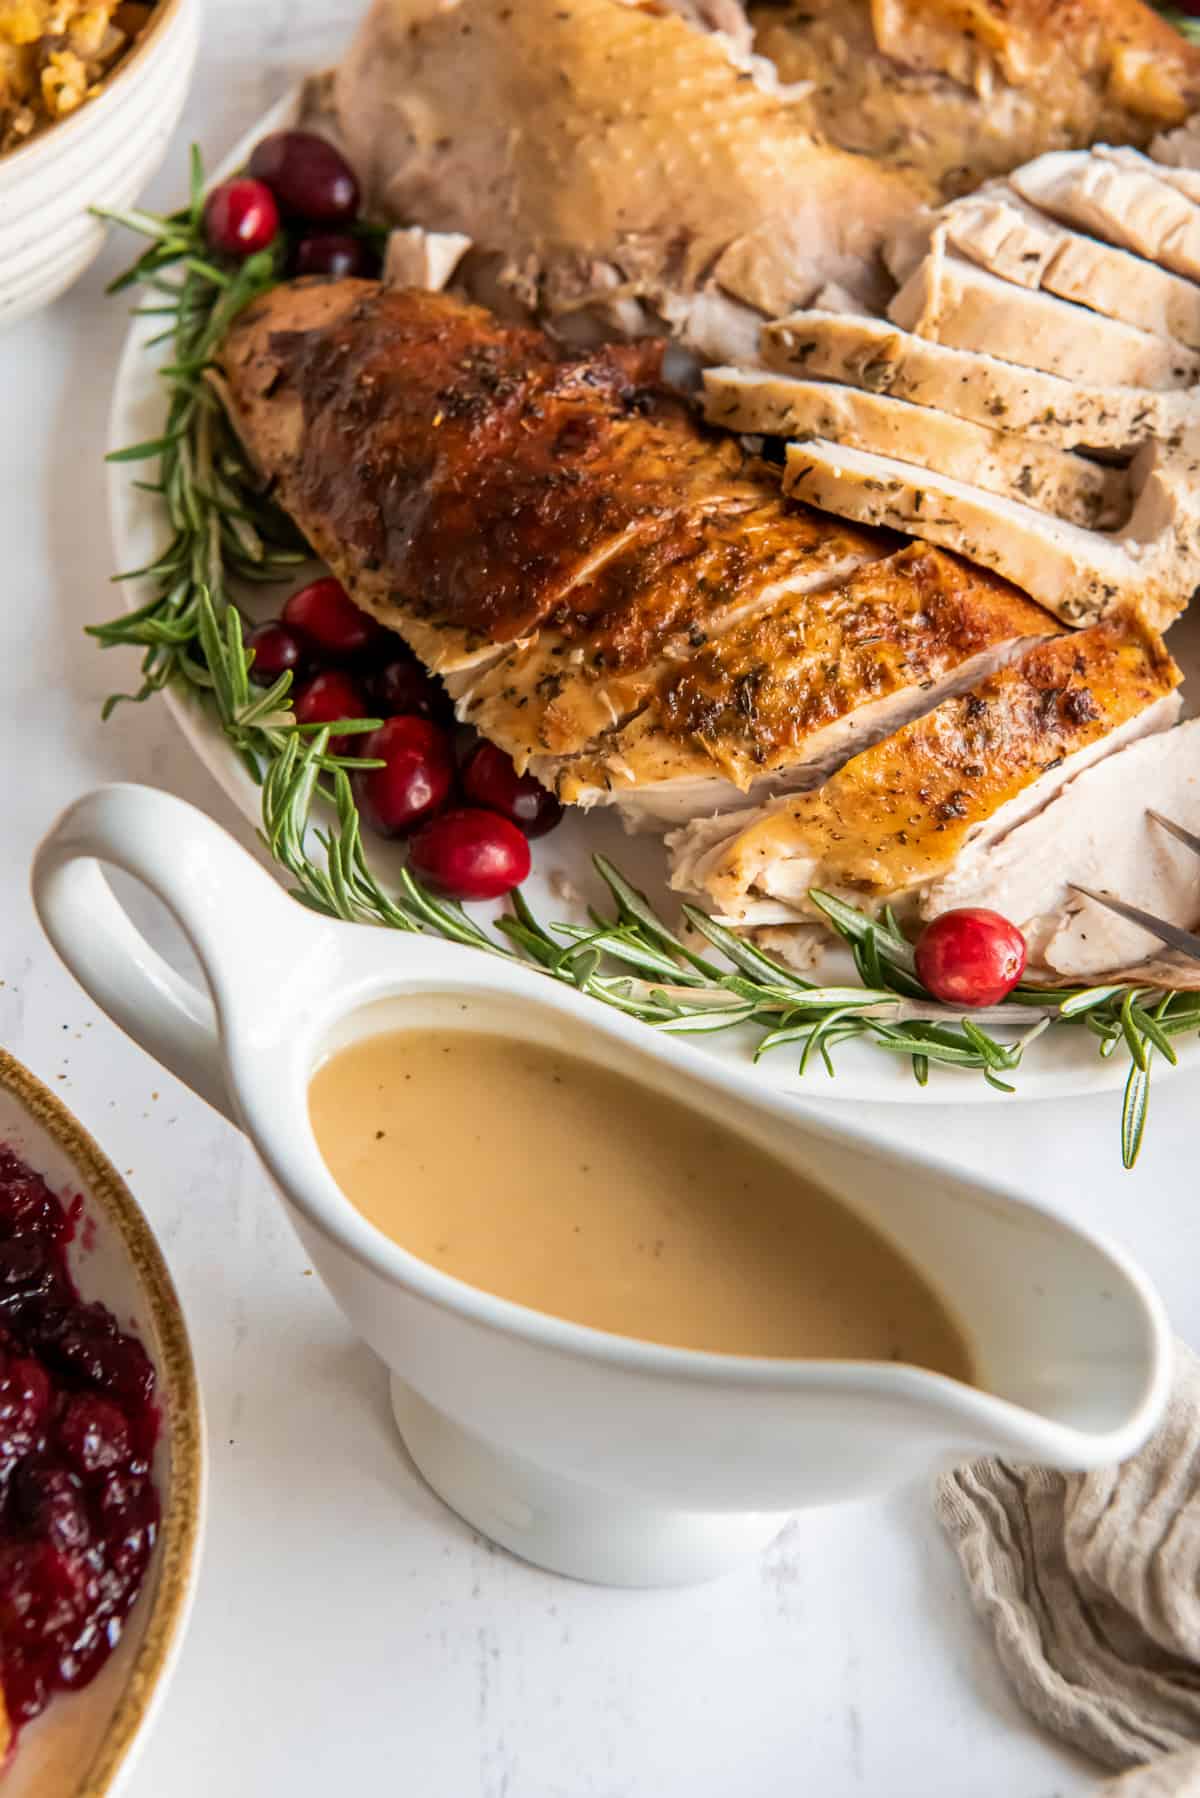 A gravy boat next to a platter of turkey.